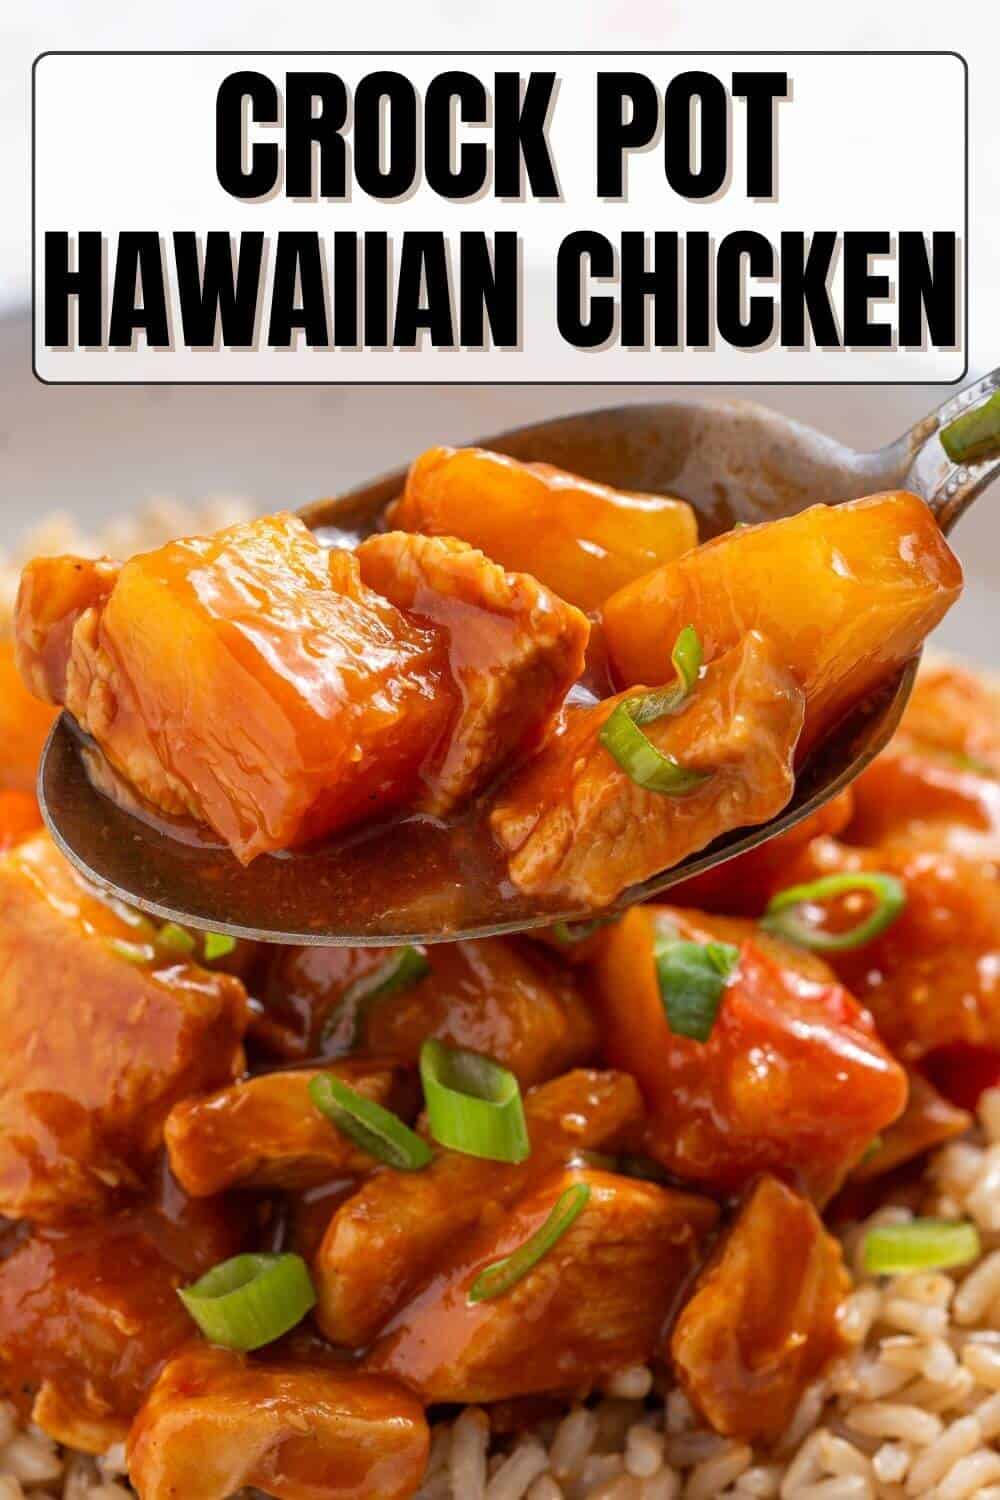 Crock pot hawaiian chicken.